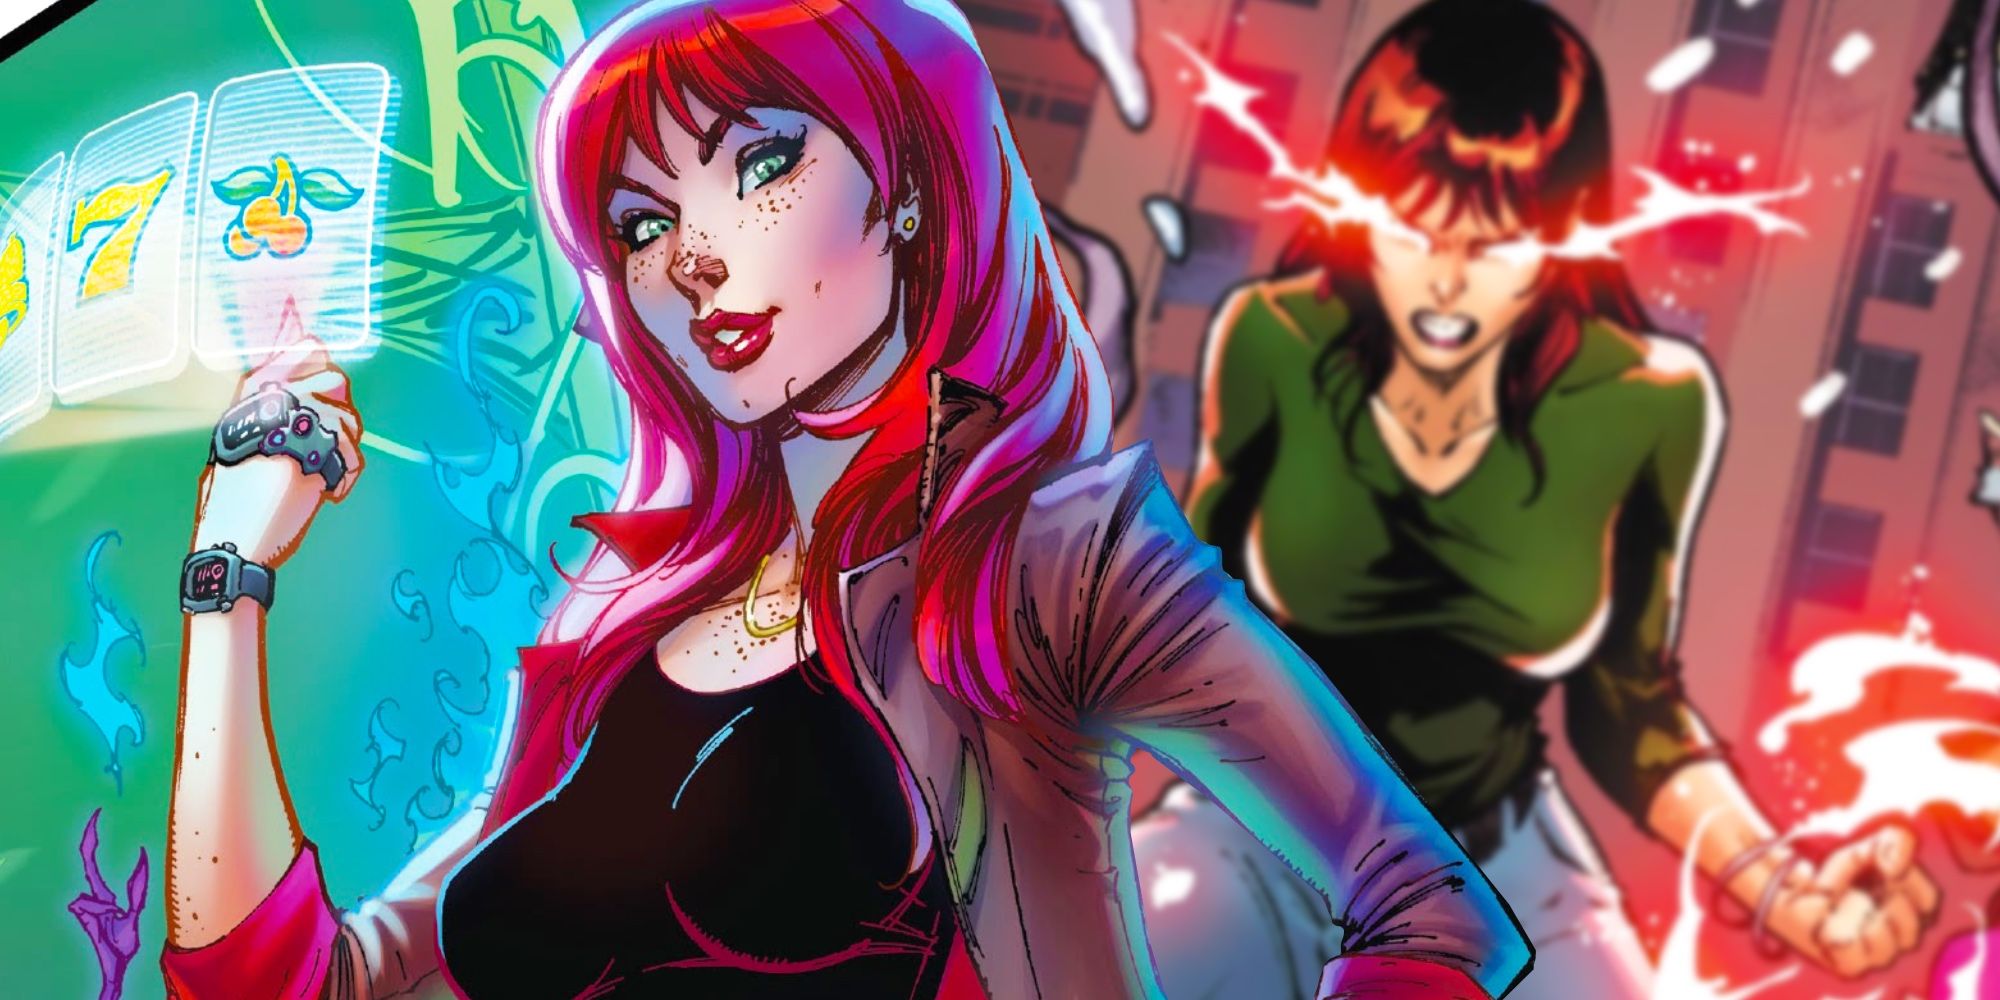 Mary Jane's Superhero Powers in Spider-Man Dark Web Crossover